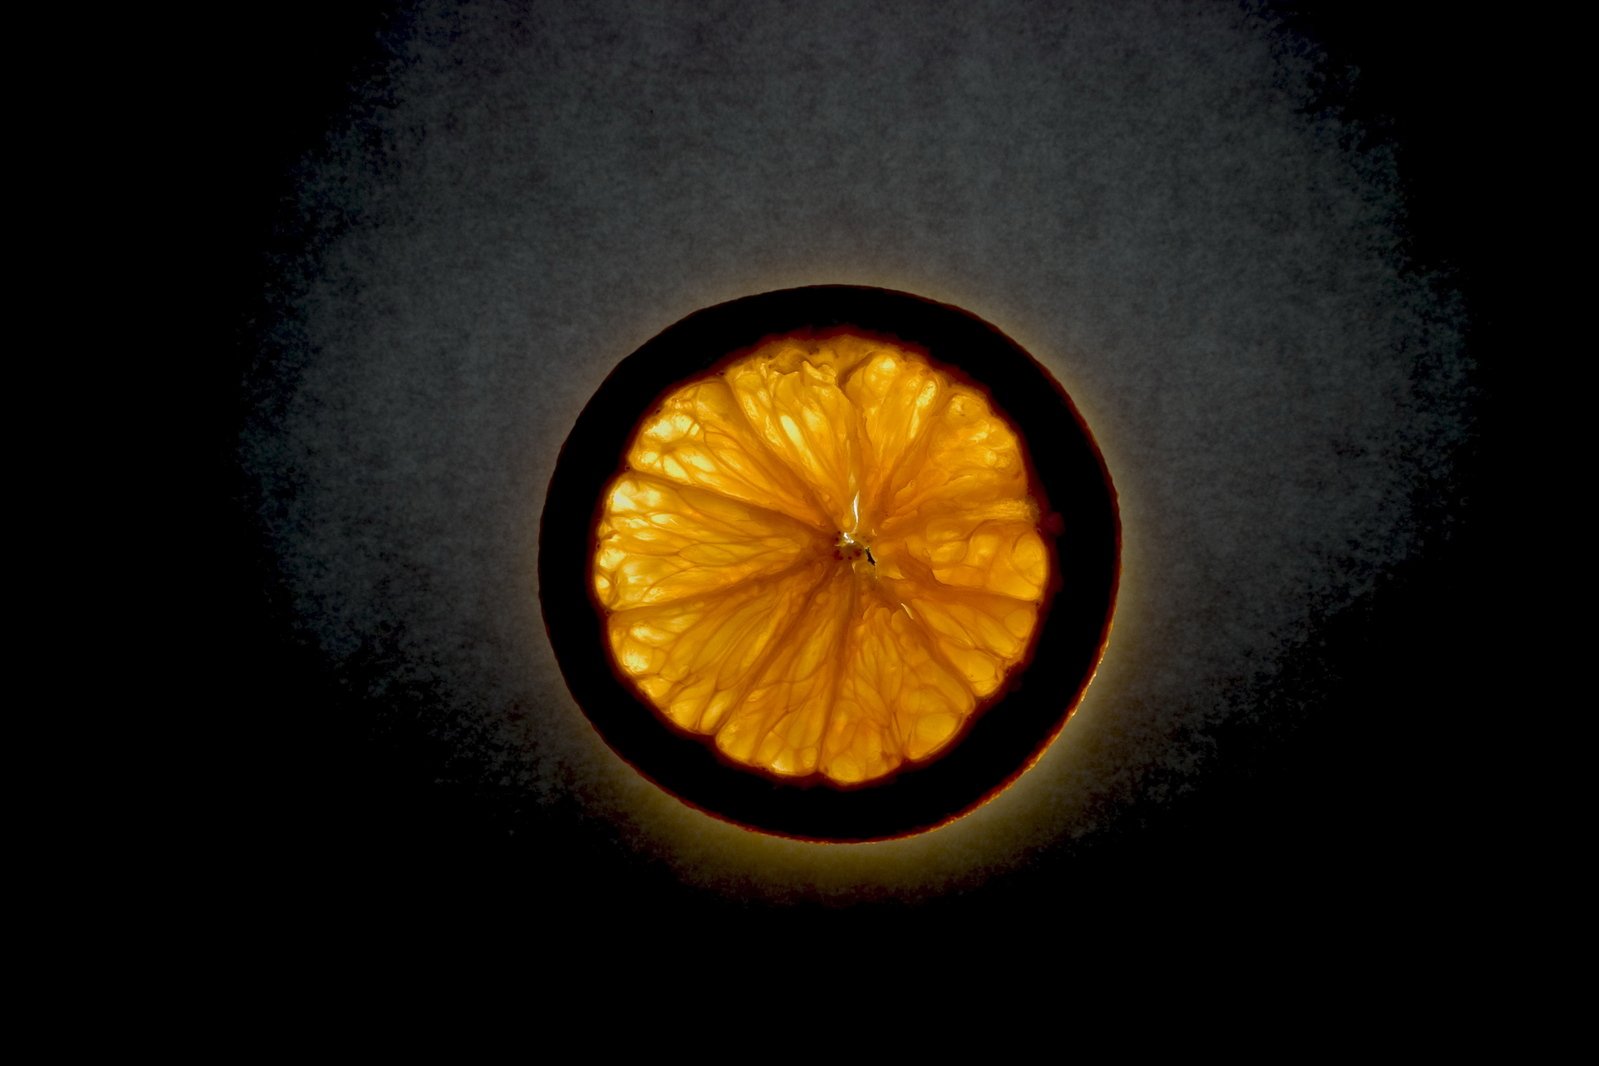 a close - up of a single orange peel on a black background